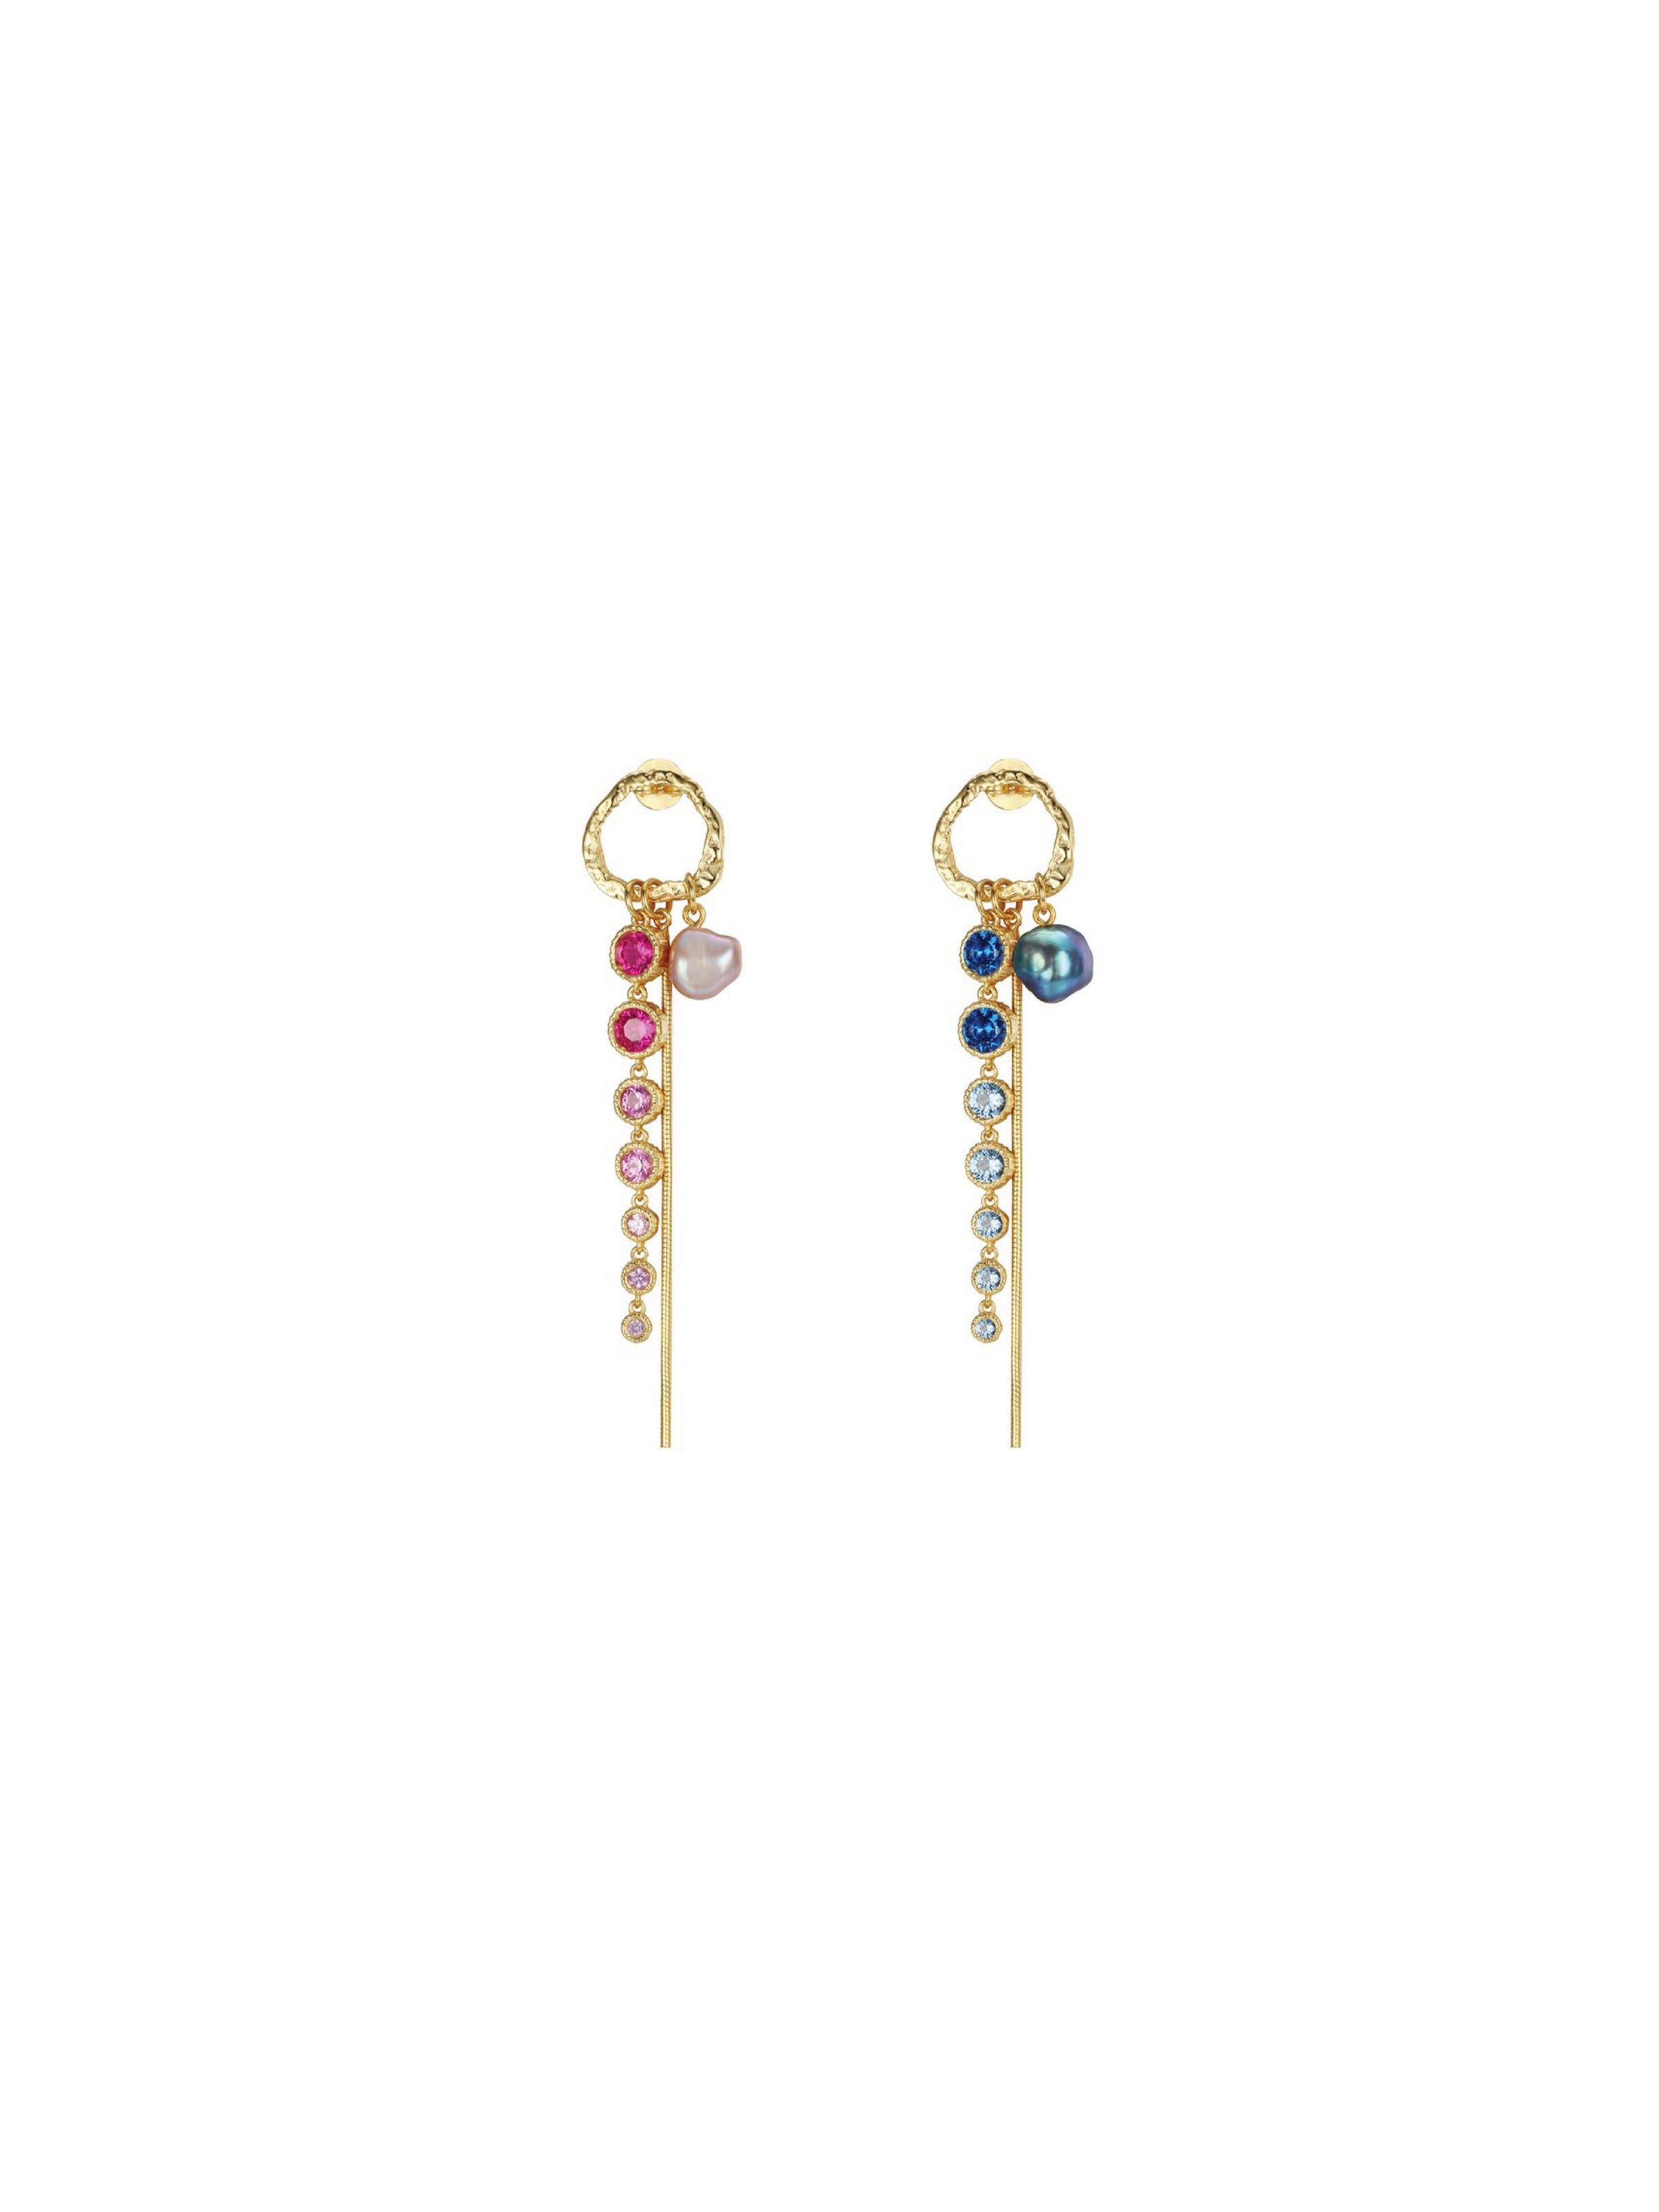 Drops of Jewels Earrings (Pair) - Orange Cube